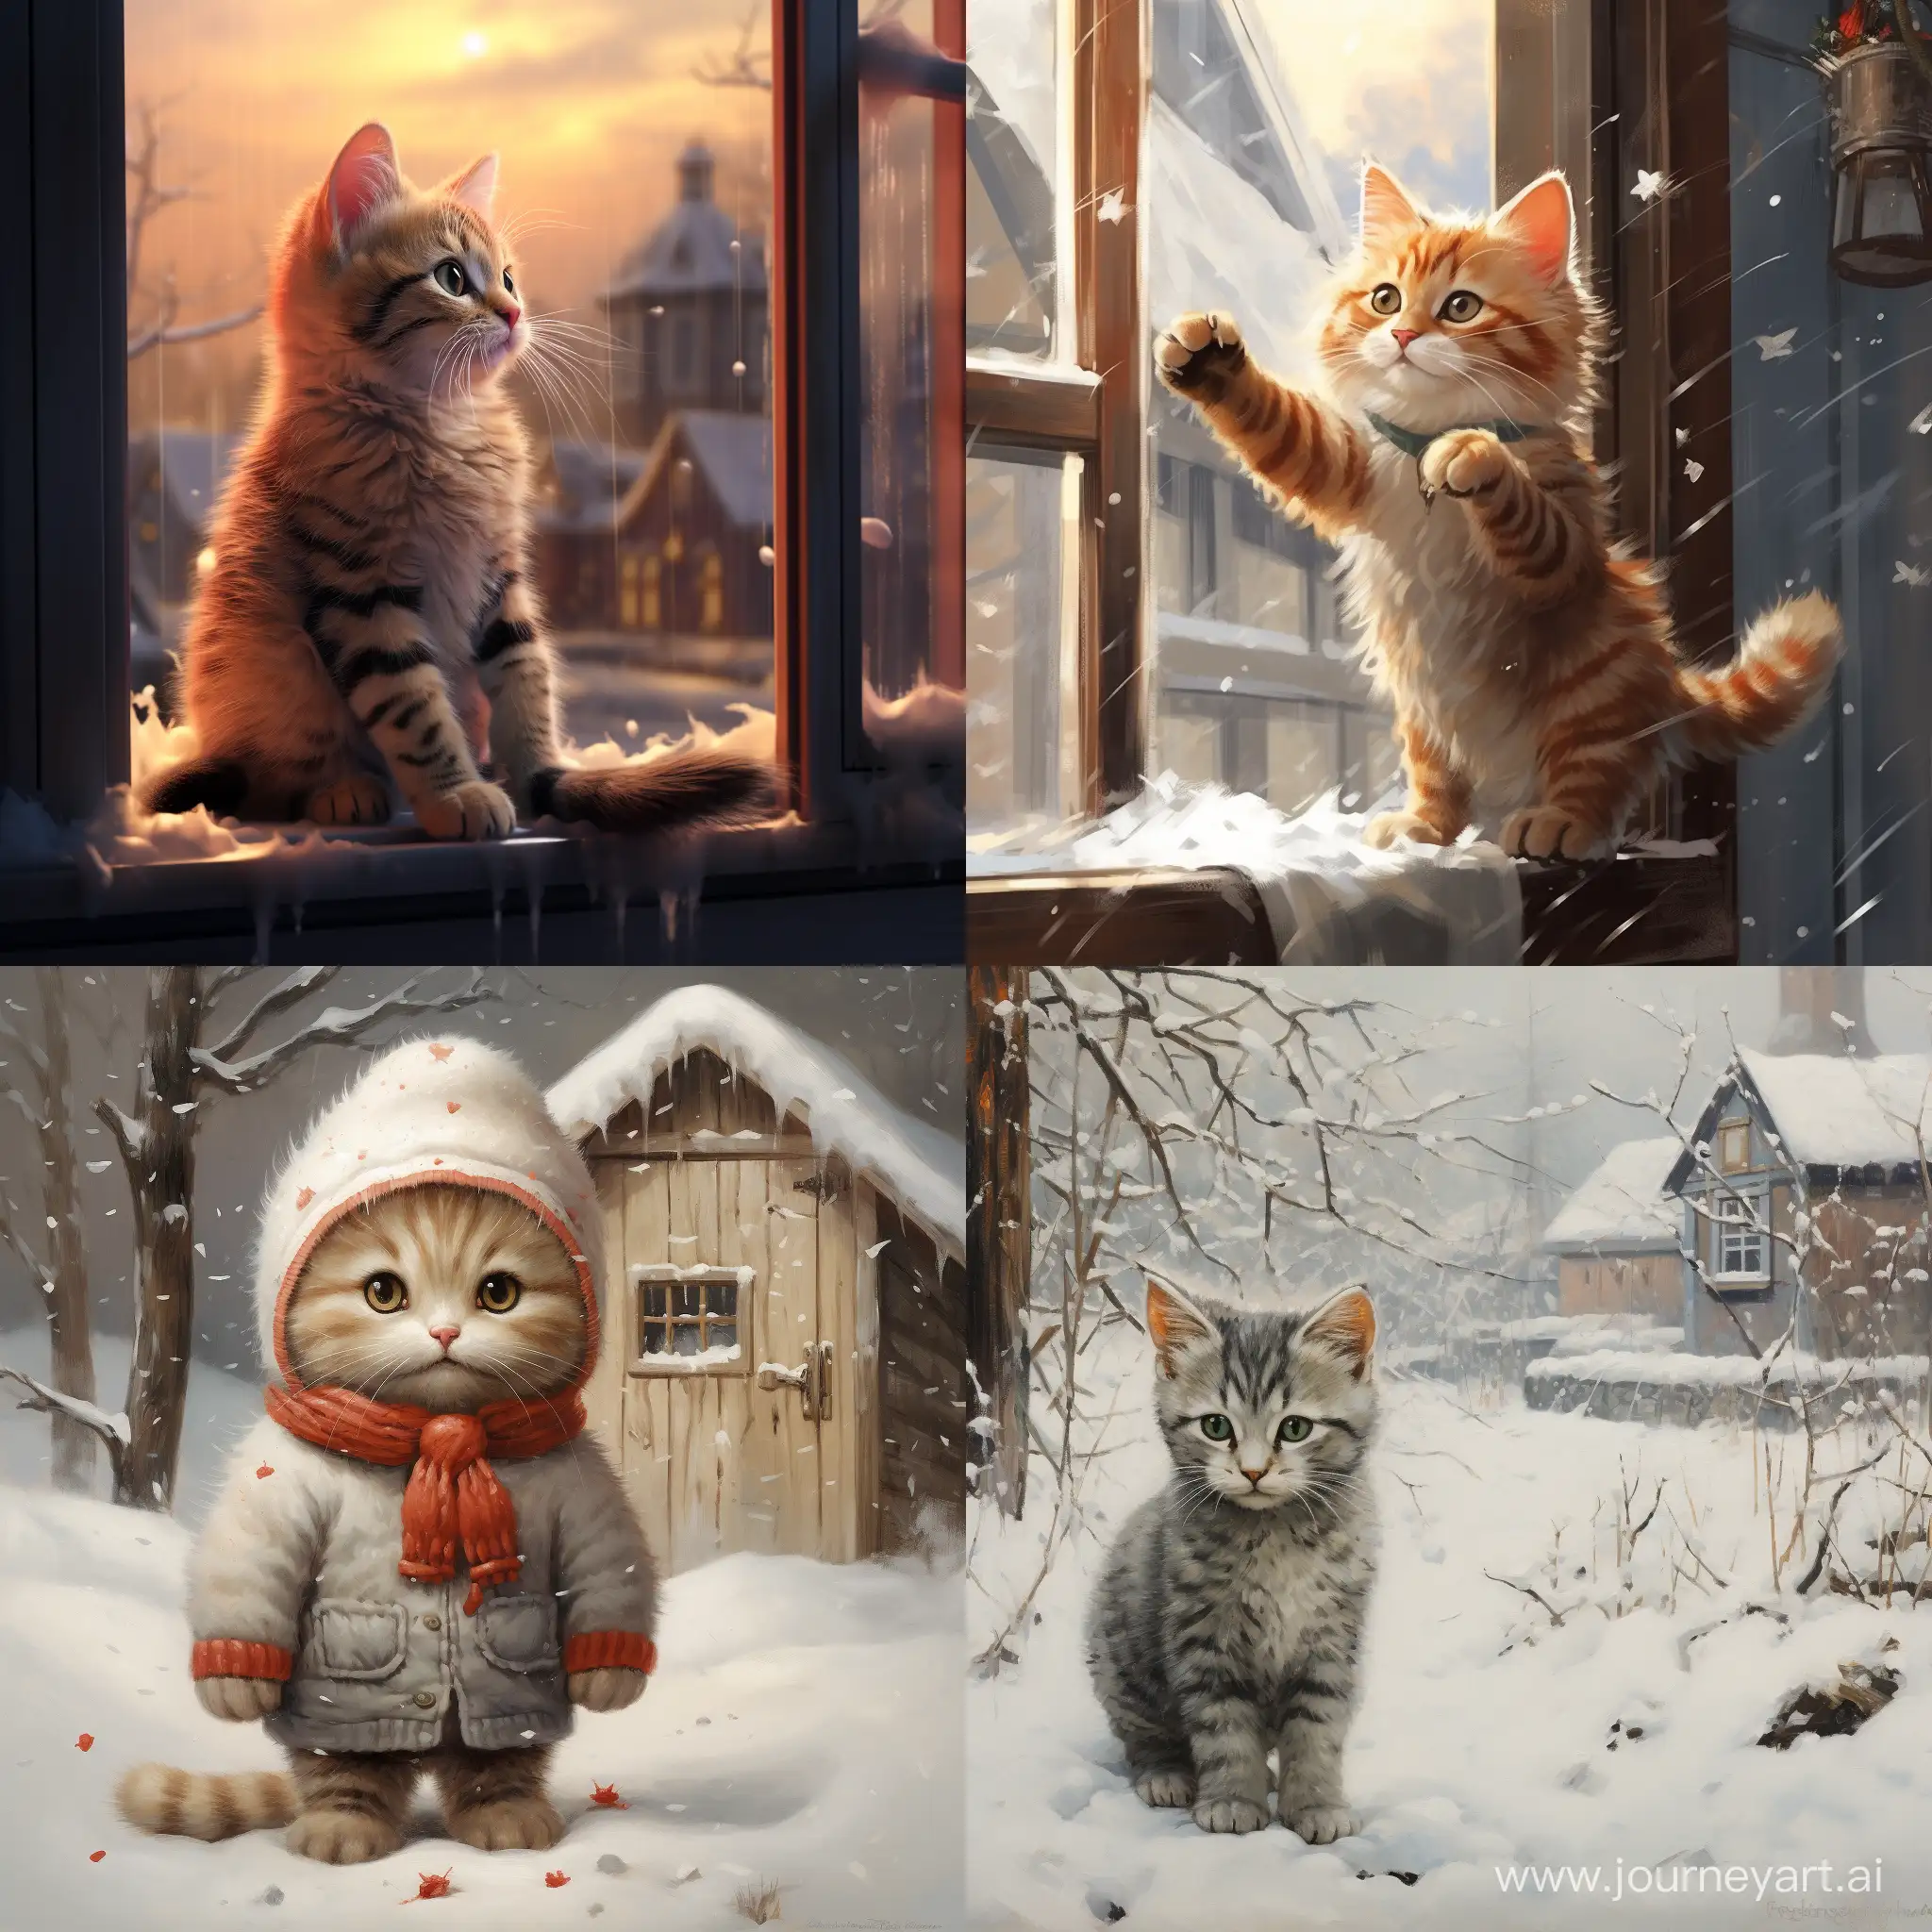 Playful-Kitty-Enjoying-Snowy-Wonderland